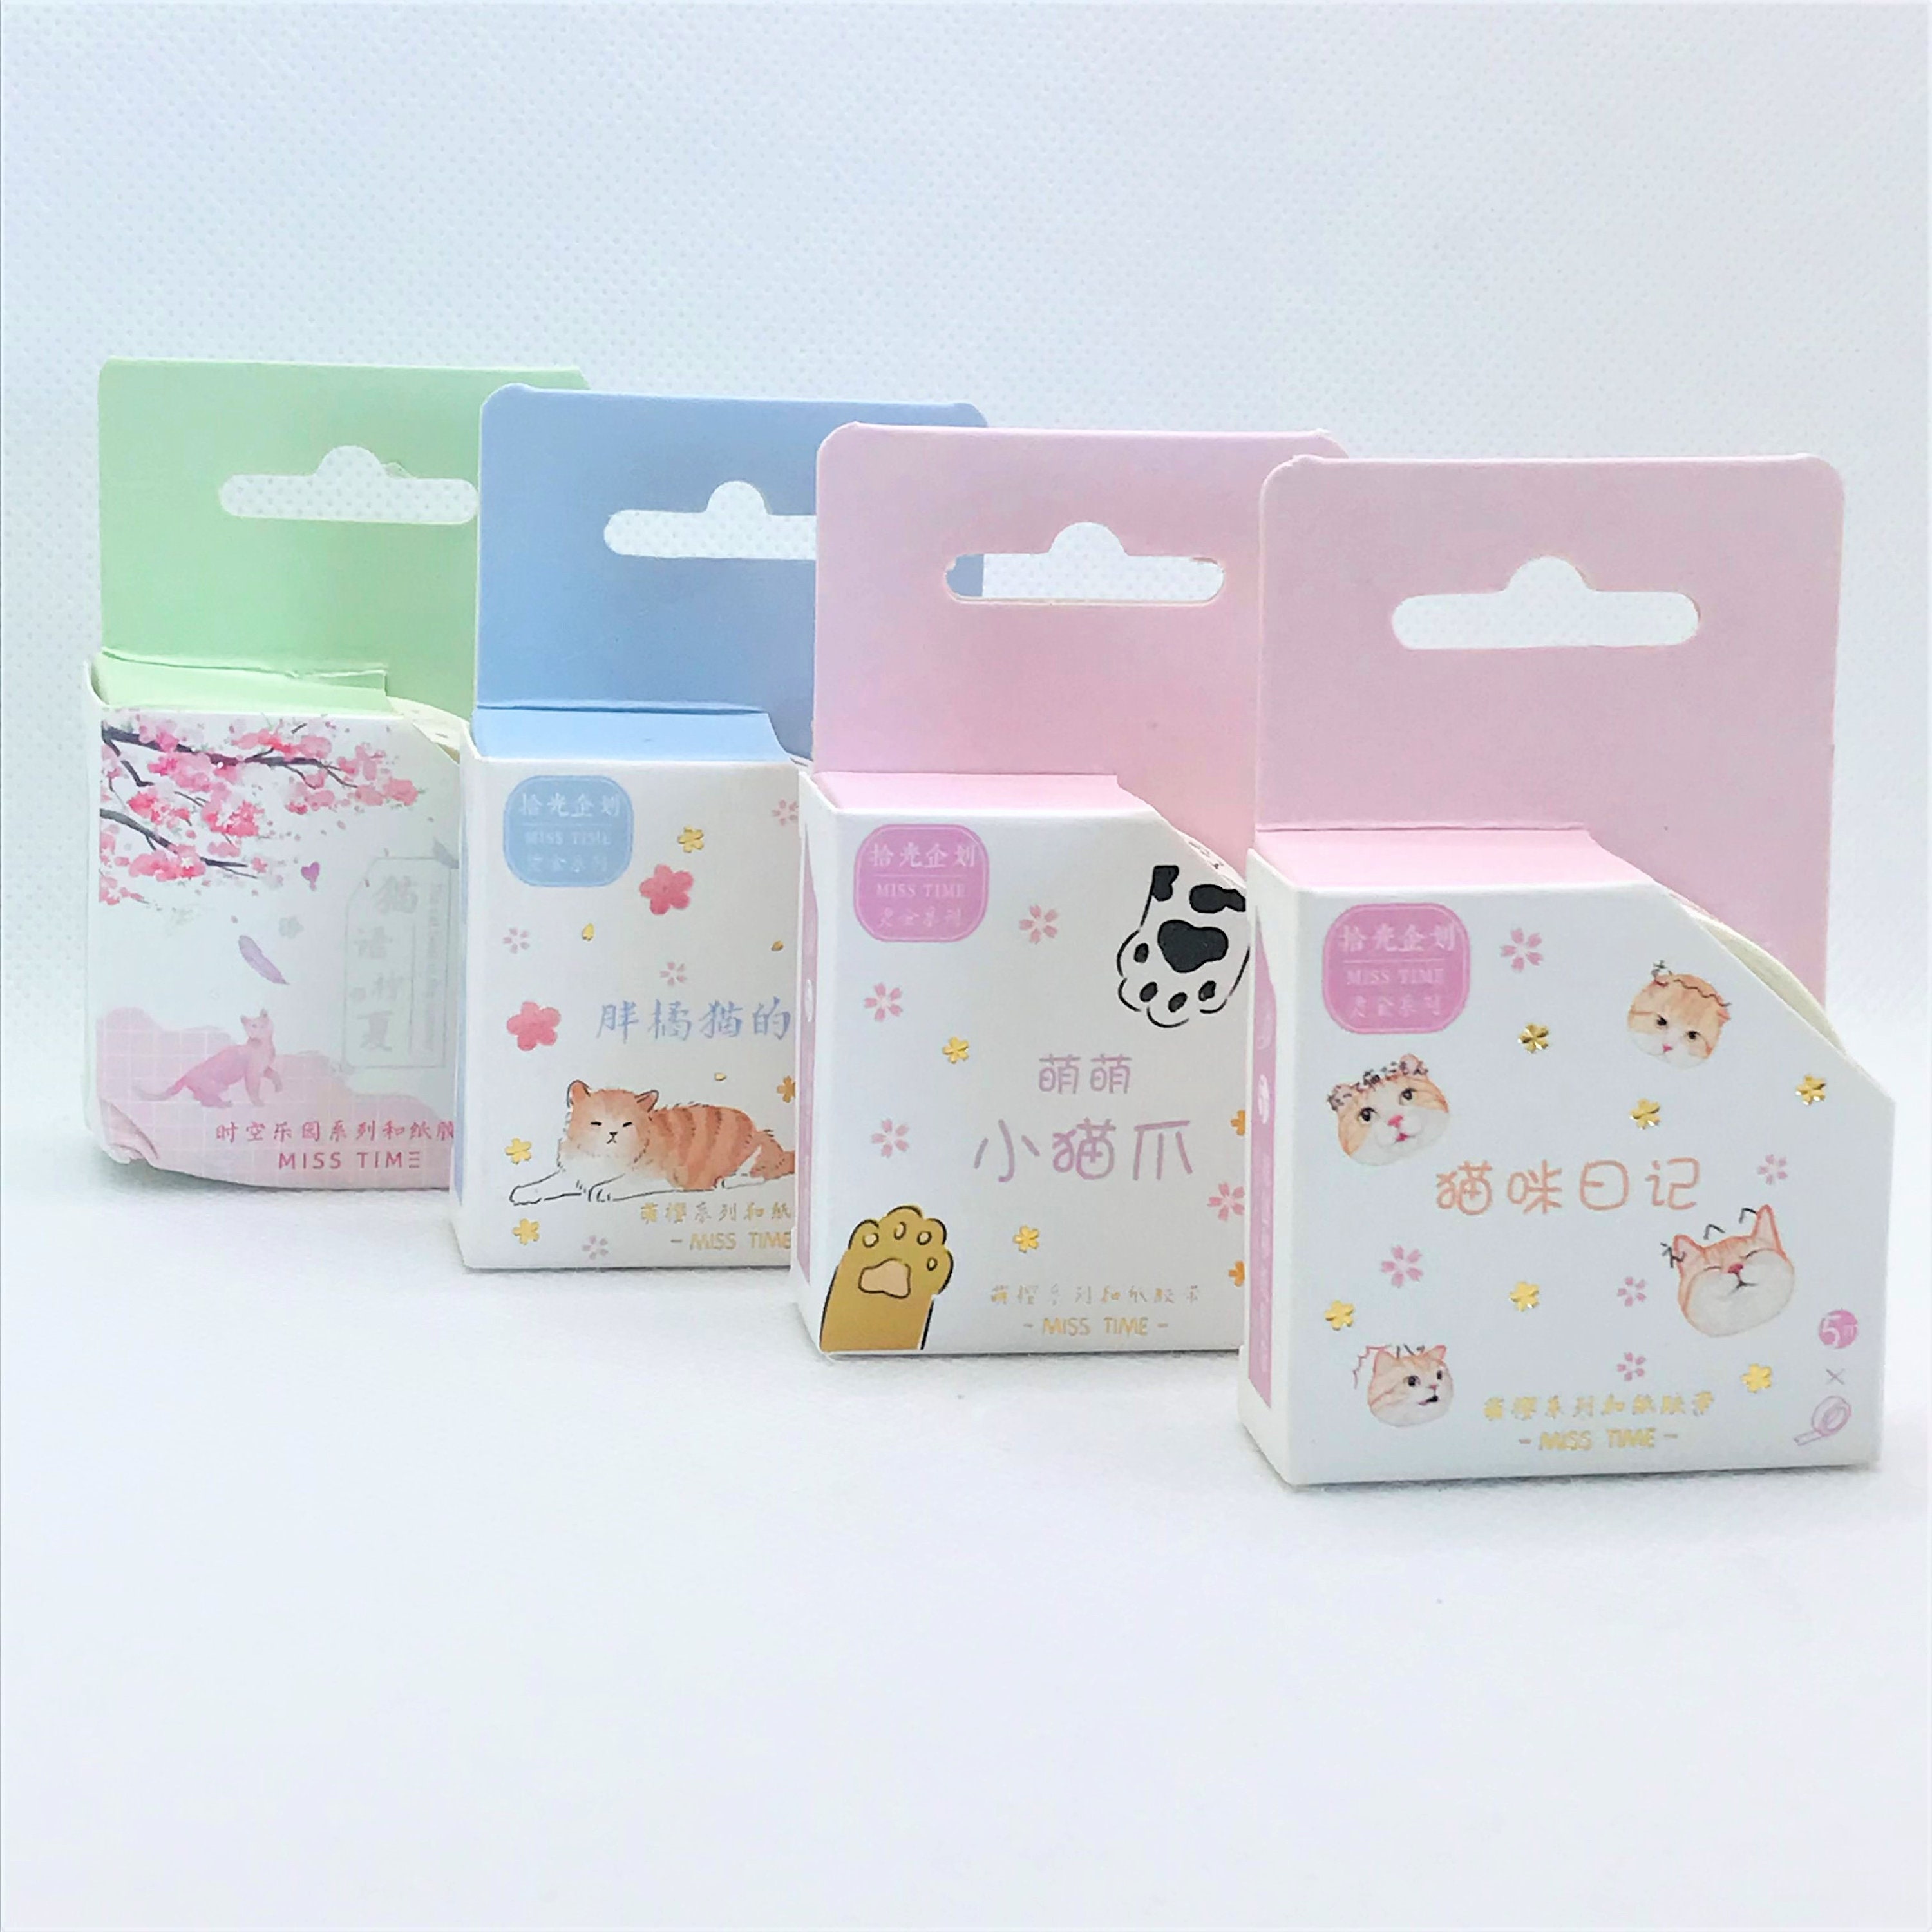 Cute cat theme Misstime Paper Masking Tapes Japanese Washi Tape